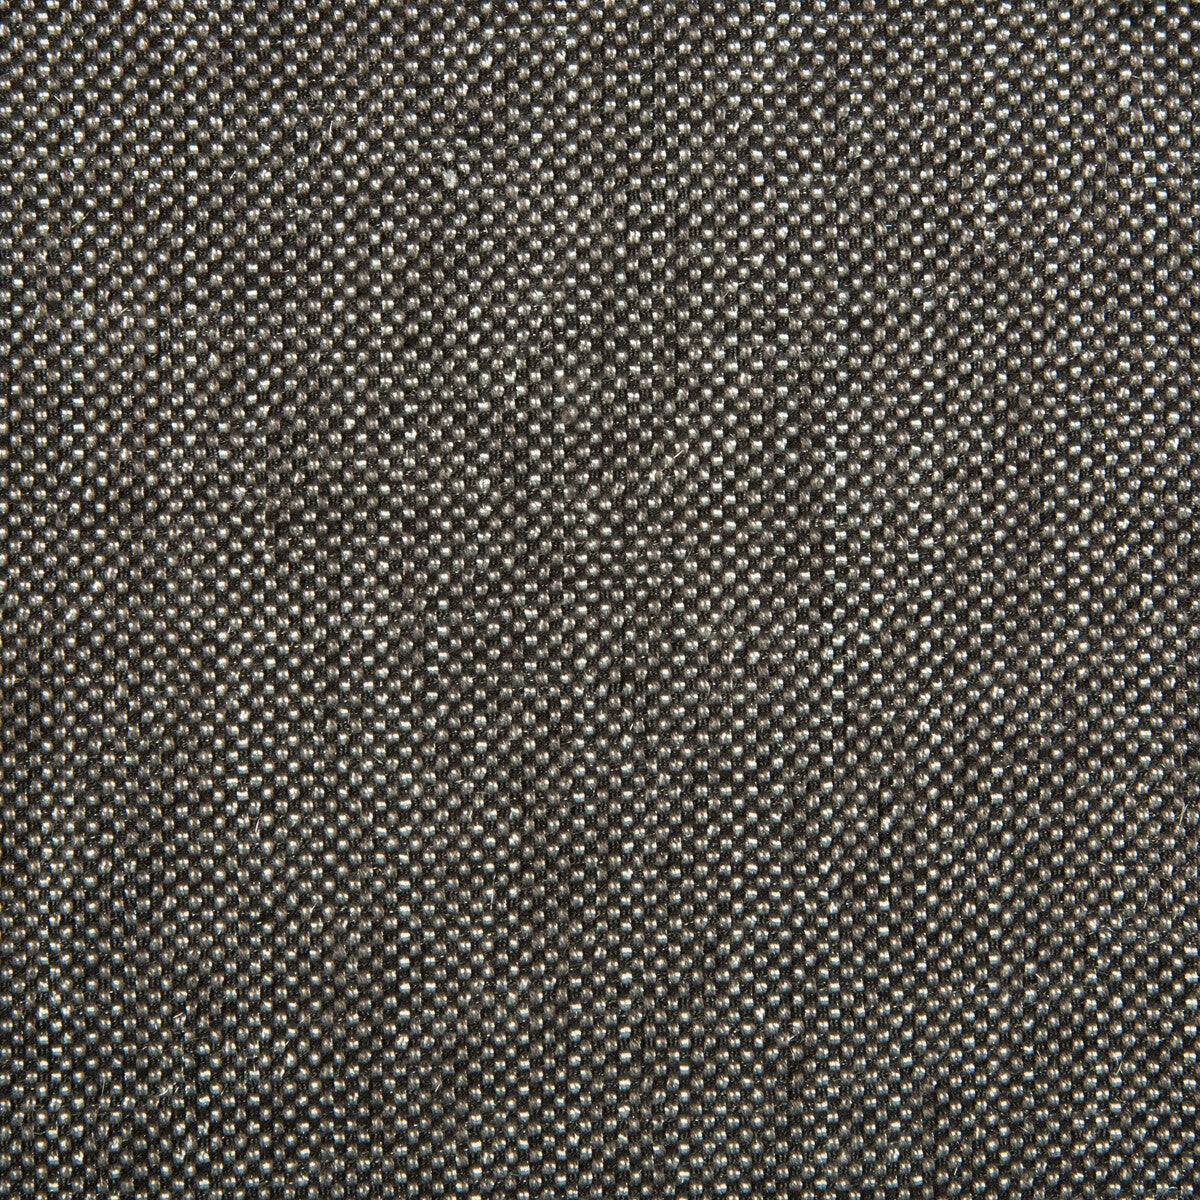 Kravet Smart fabric in 34939-811 color - pattern 34939.811.0 - by Kravet Smart